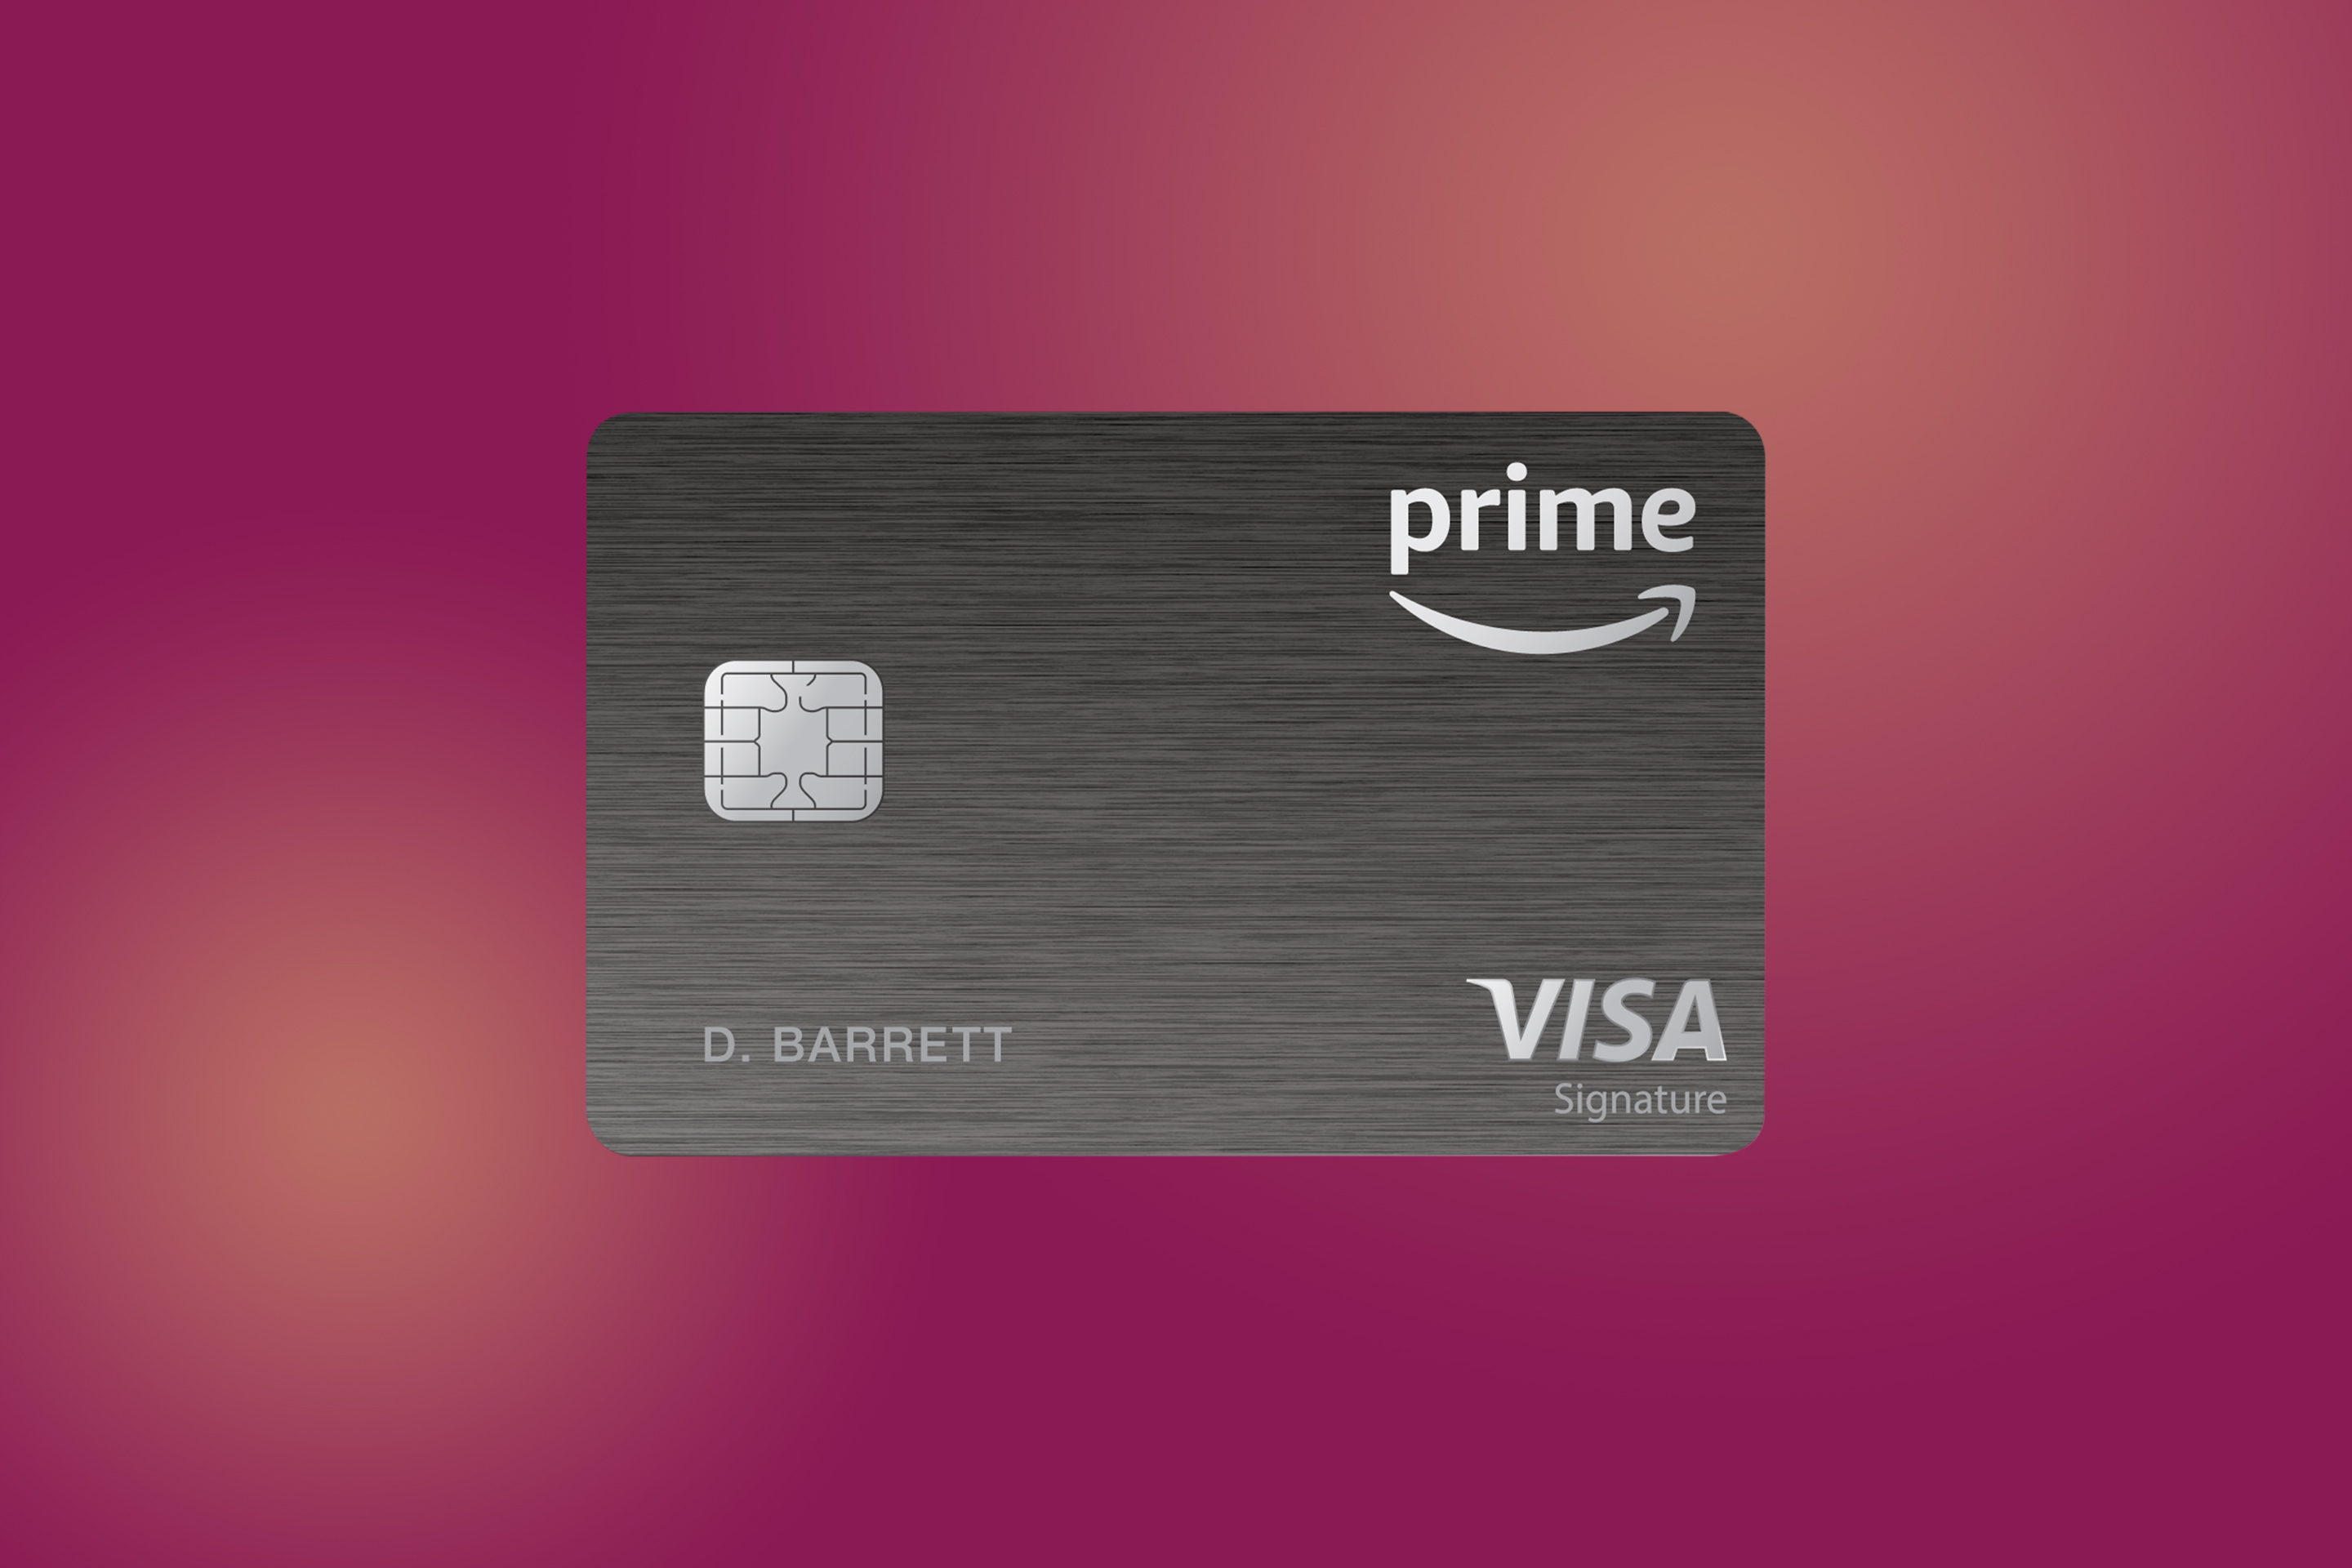 chase amazon com visa signature credit card